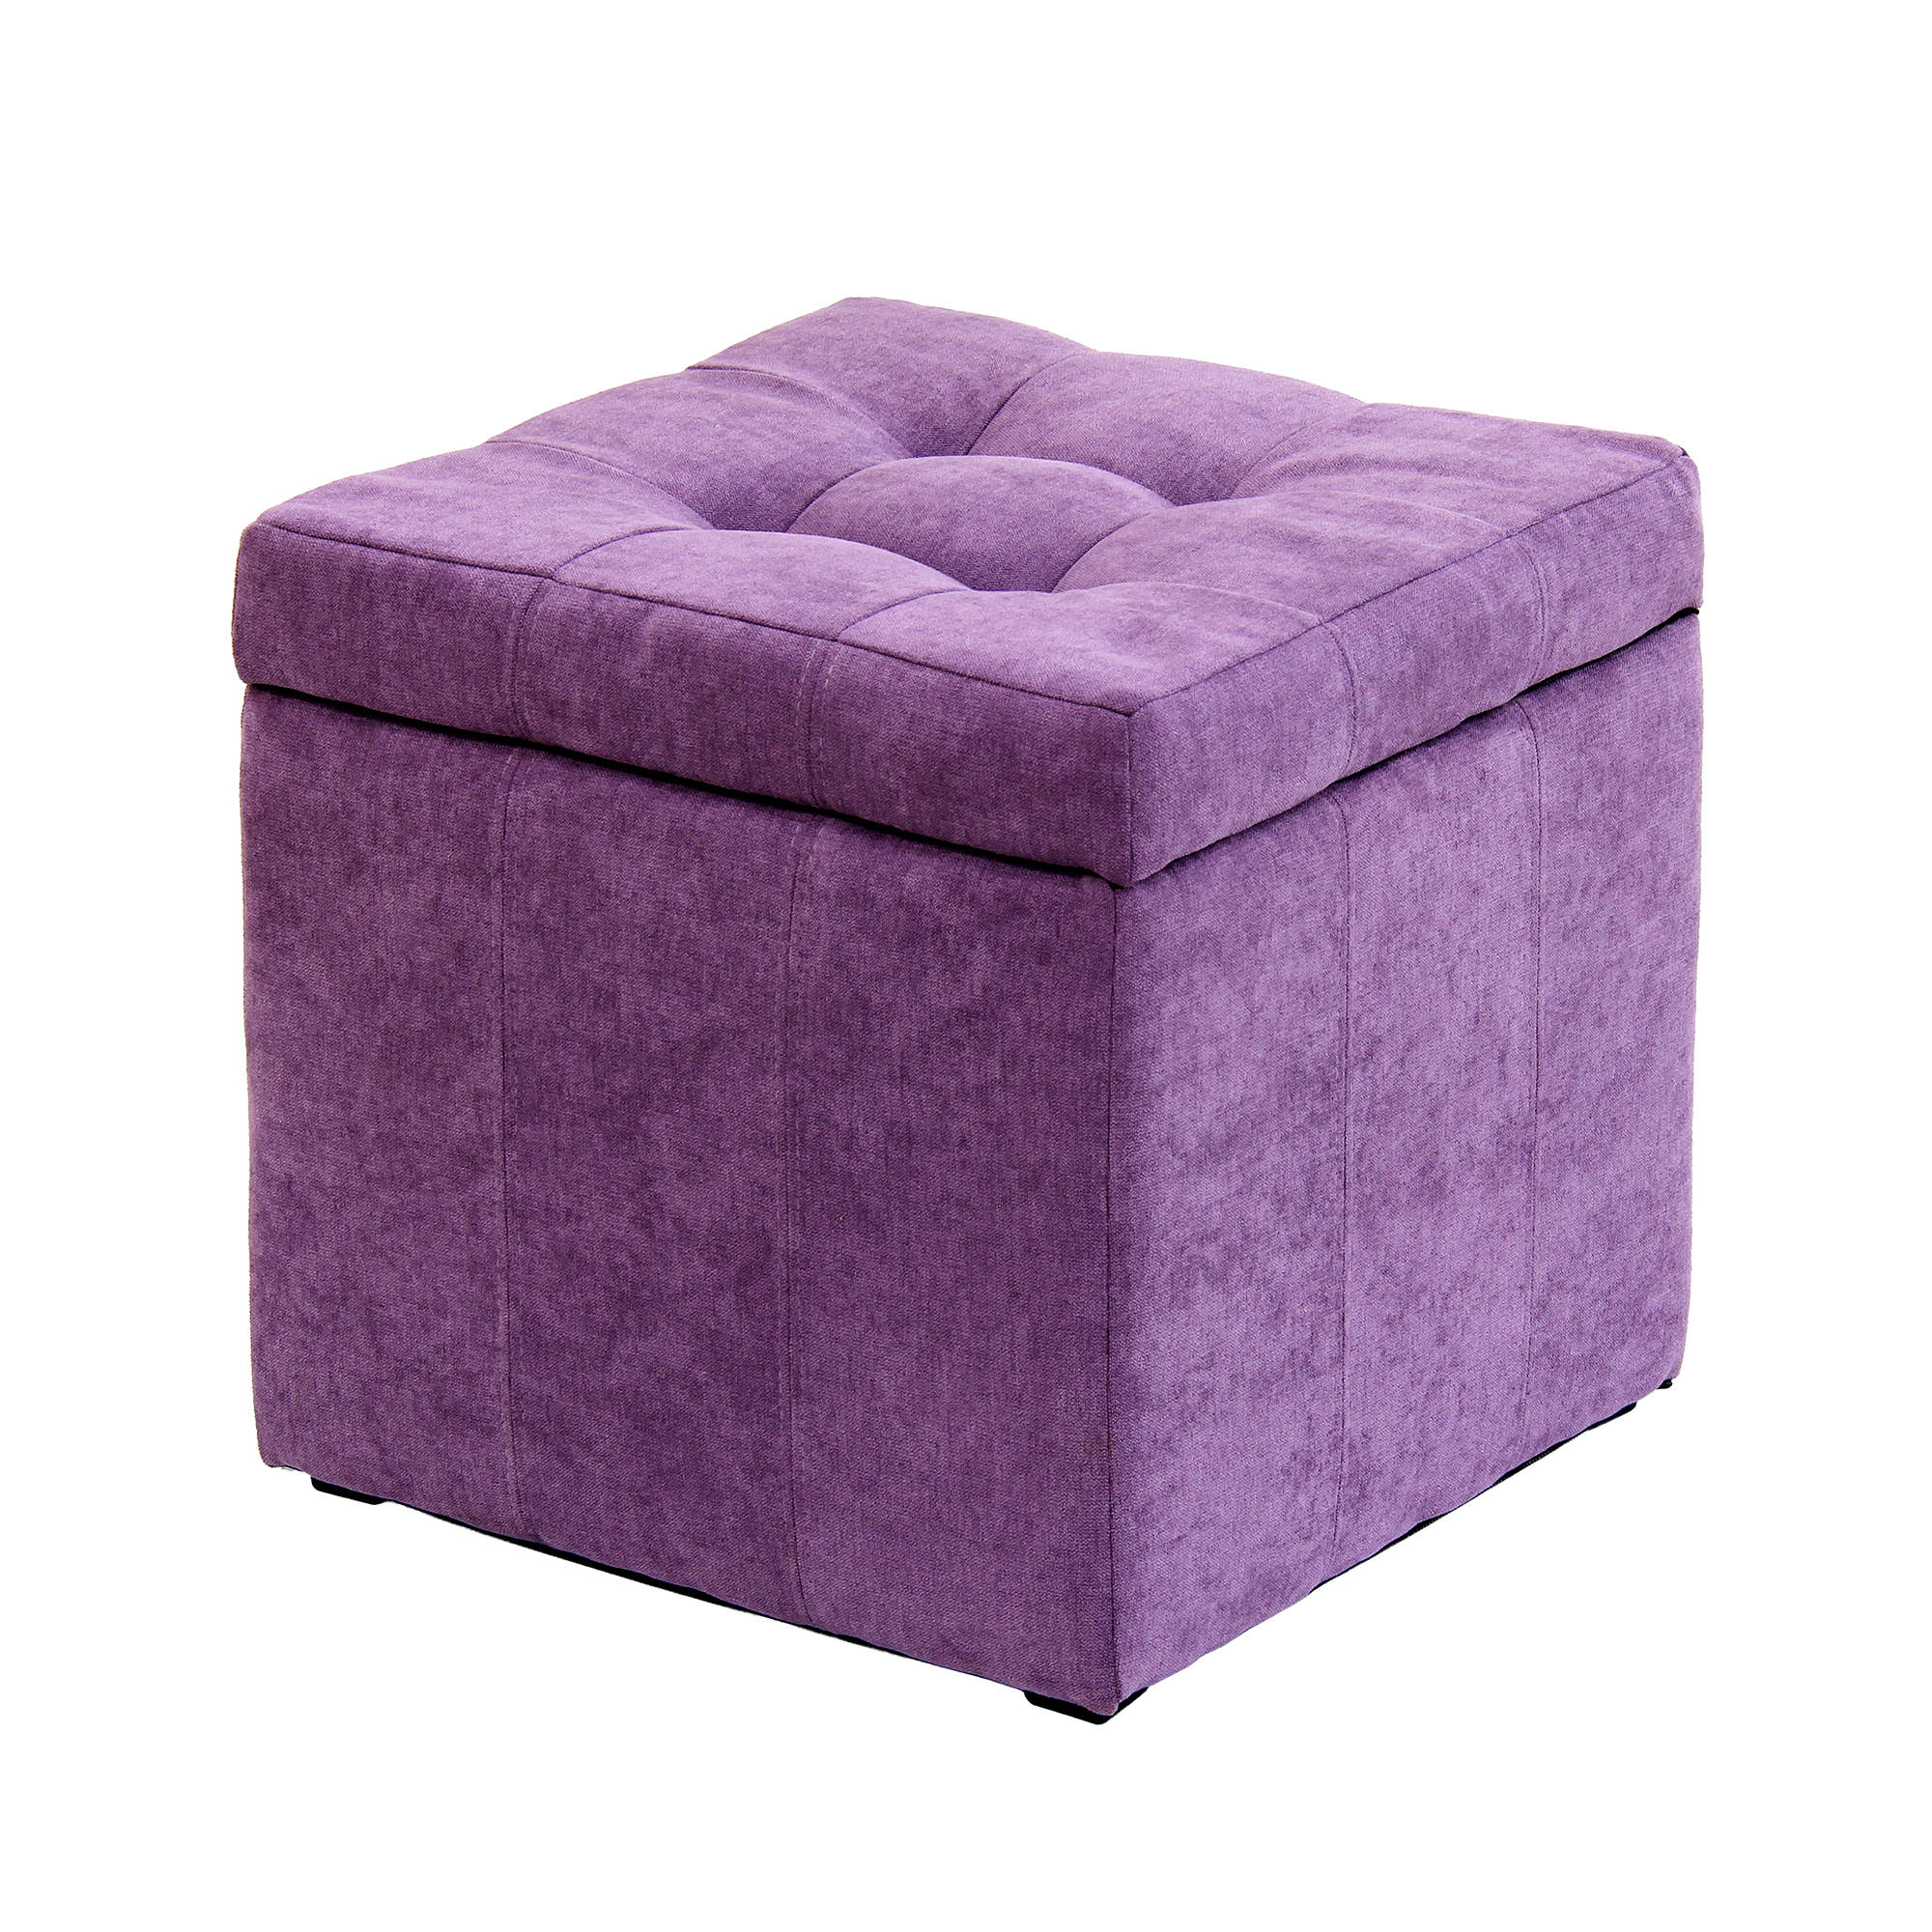 фото Банкетка dreambag модерна фиолетовый велюр 46х46х46